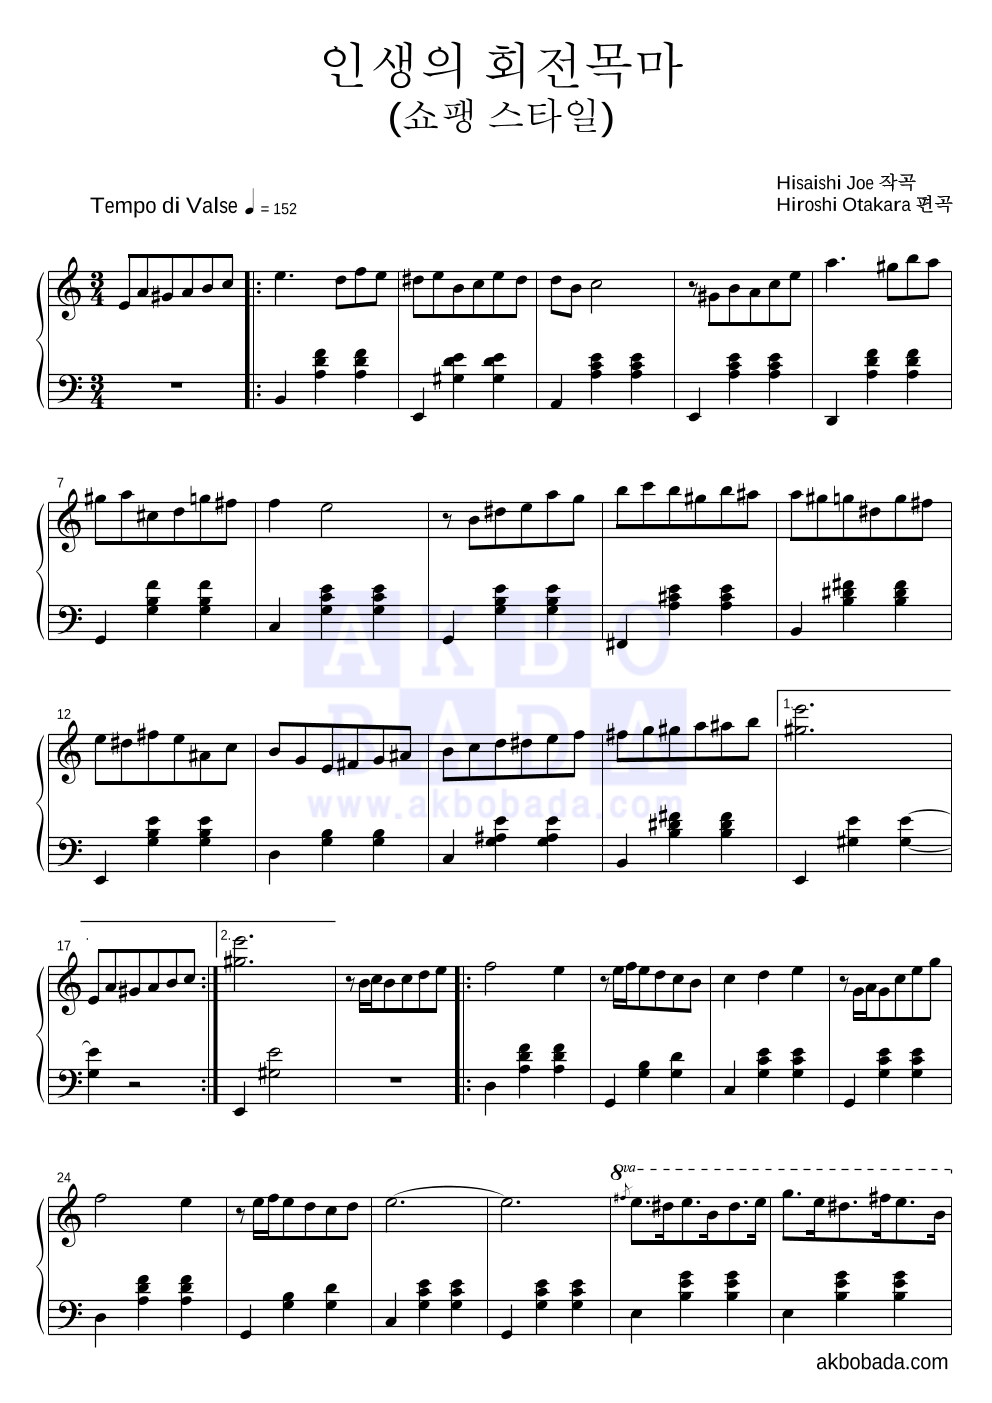 Hiroshi Otakara - 인생의 회전목마 (쇼팽 스타일) 피아노 2단 악보 